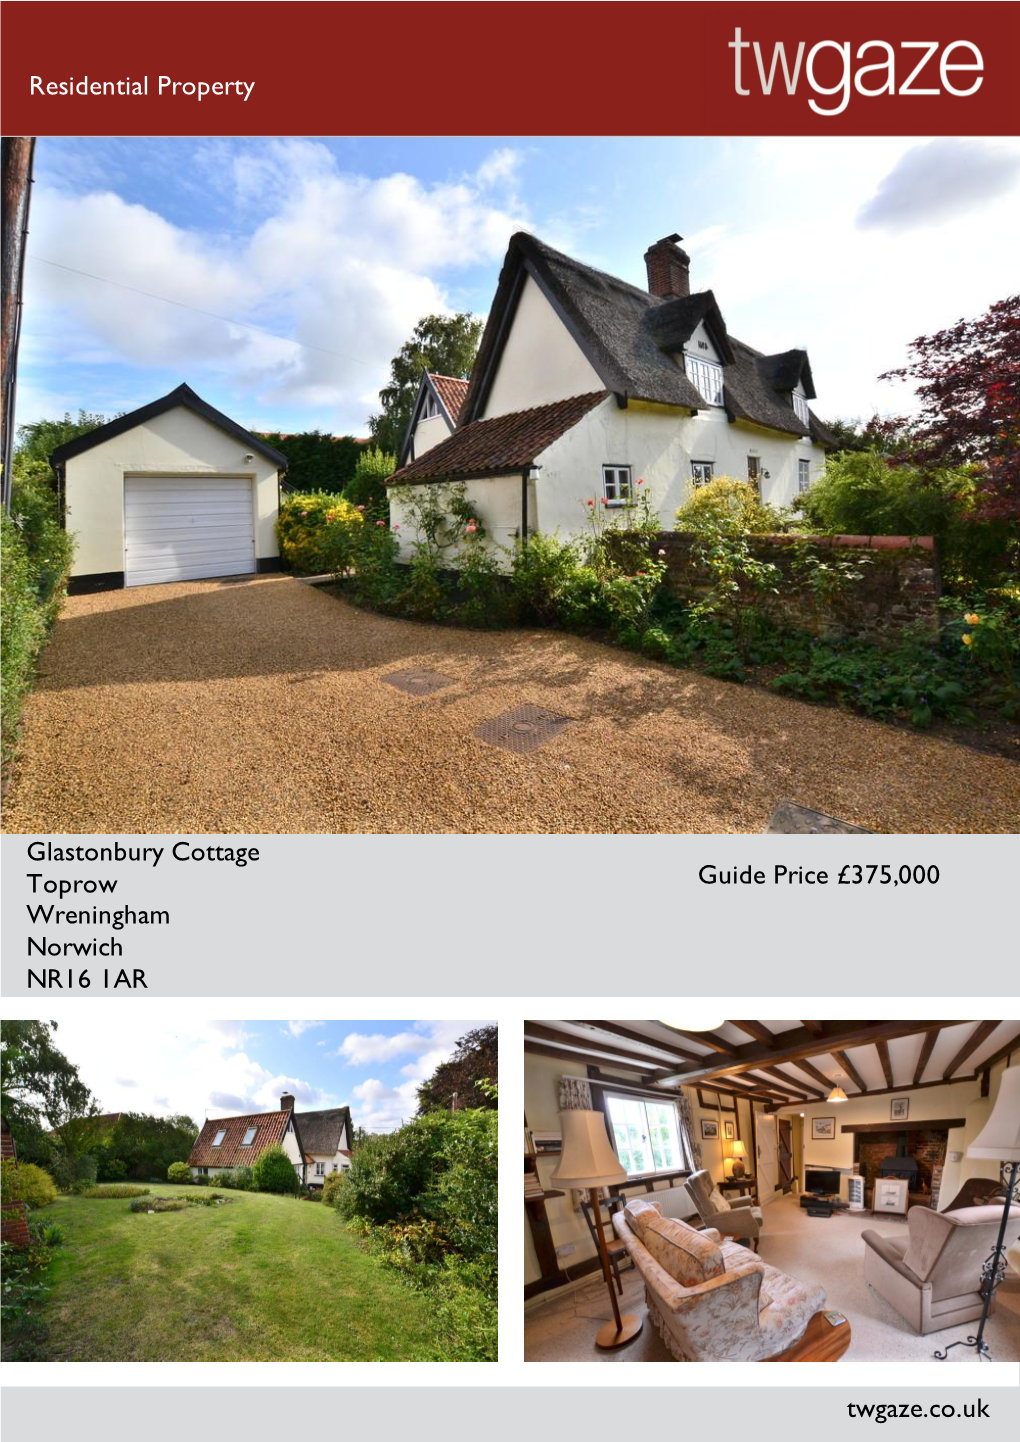 Residential Property Glastonbury Cottage Toprow Wreningham